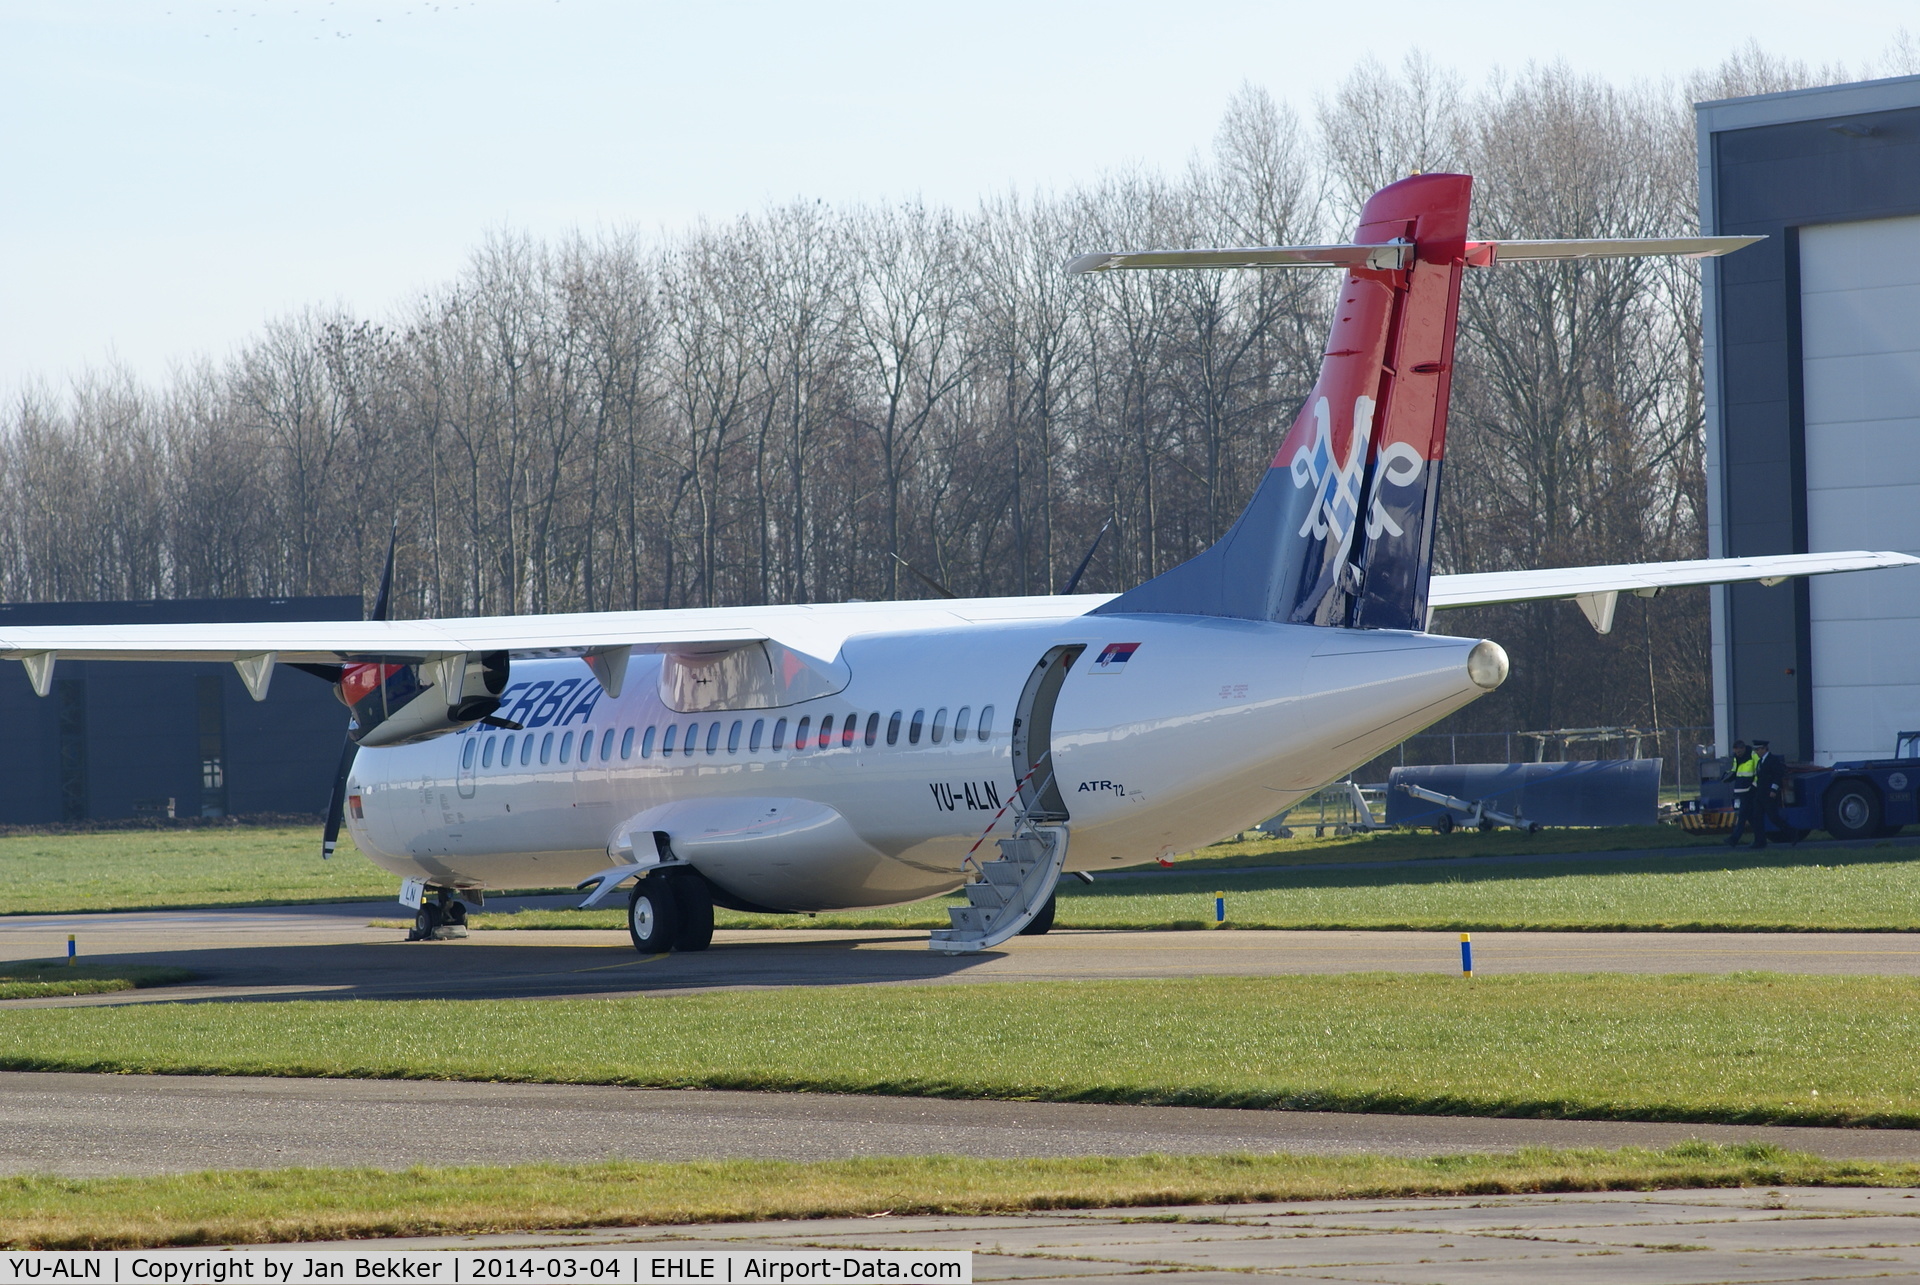 YU-ALN, 1990 ATR 72-202 C/N 180, Lelystad, just got its new livery